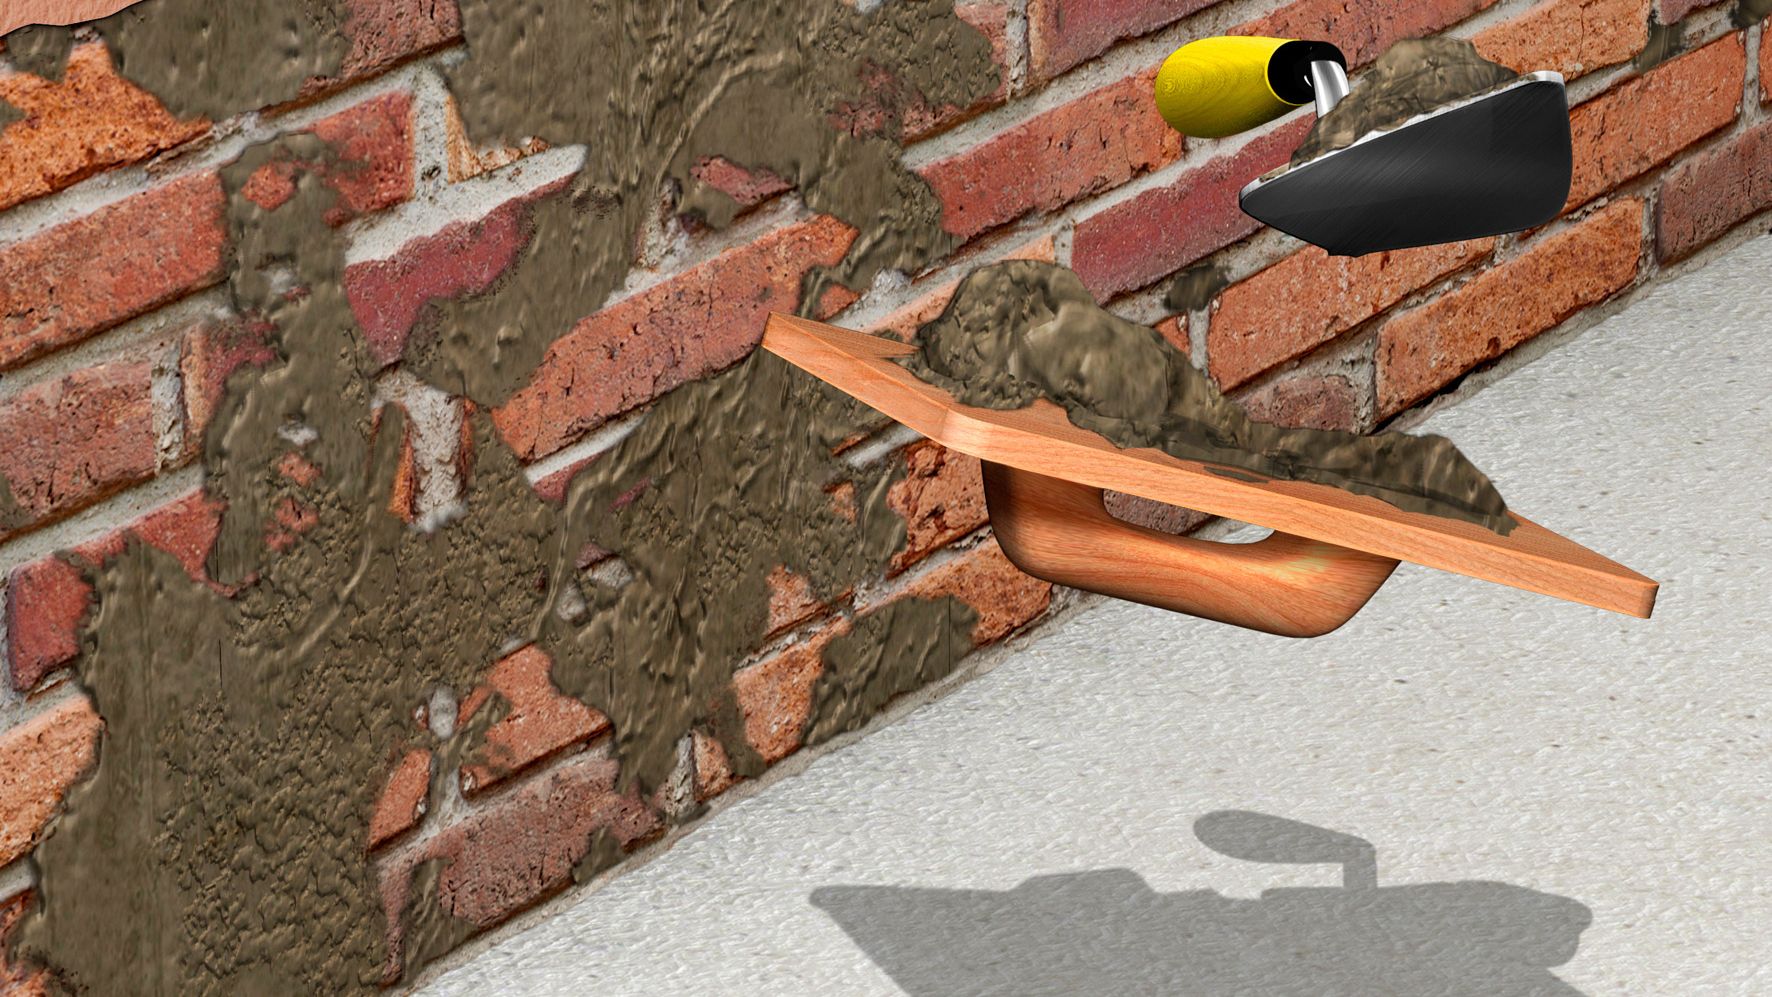   Application of renovation mortar on the wall